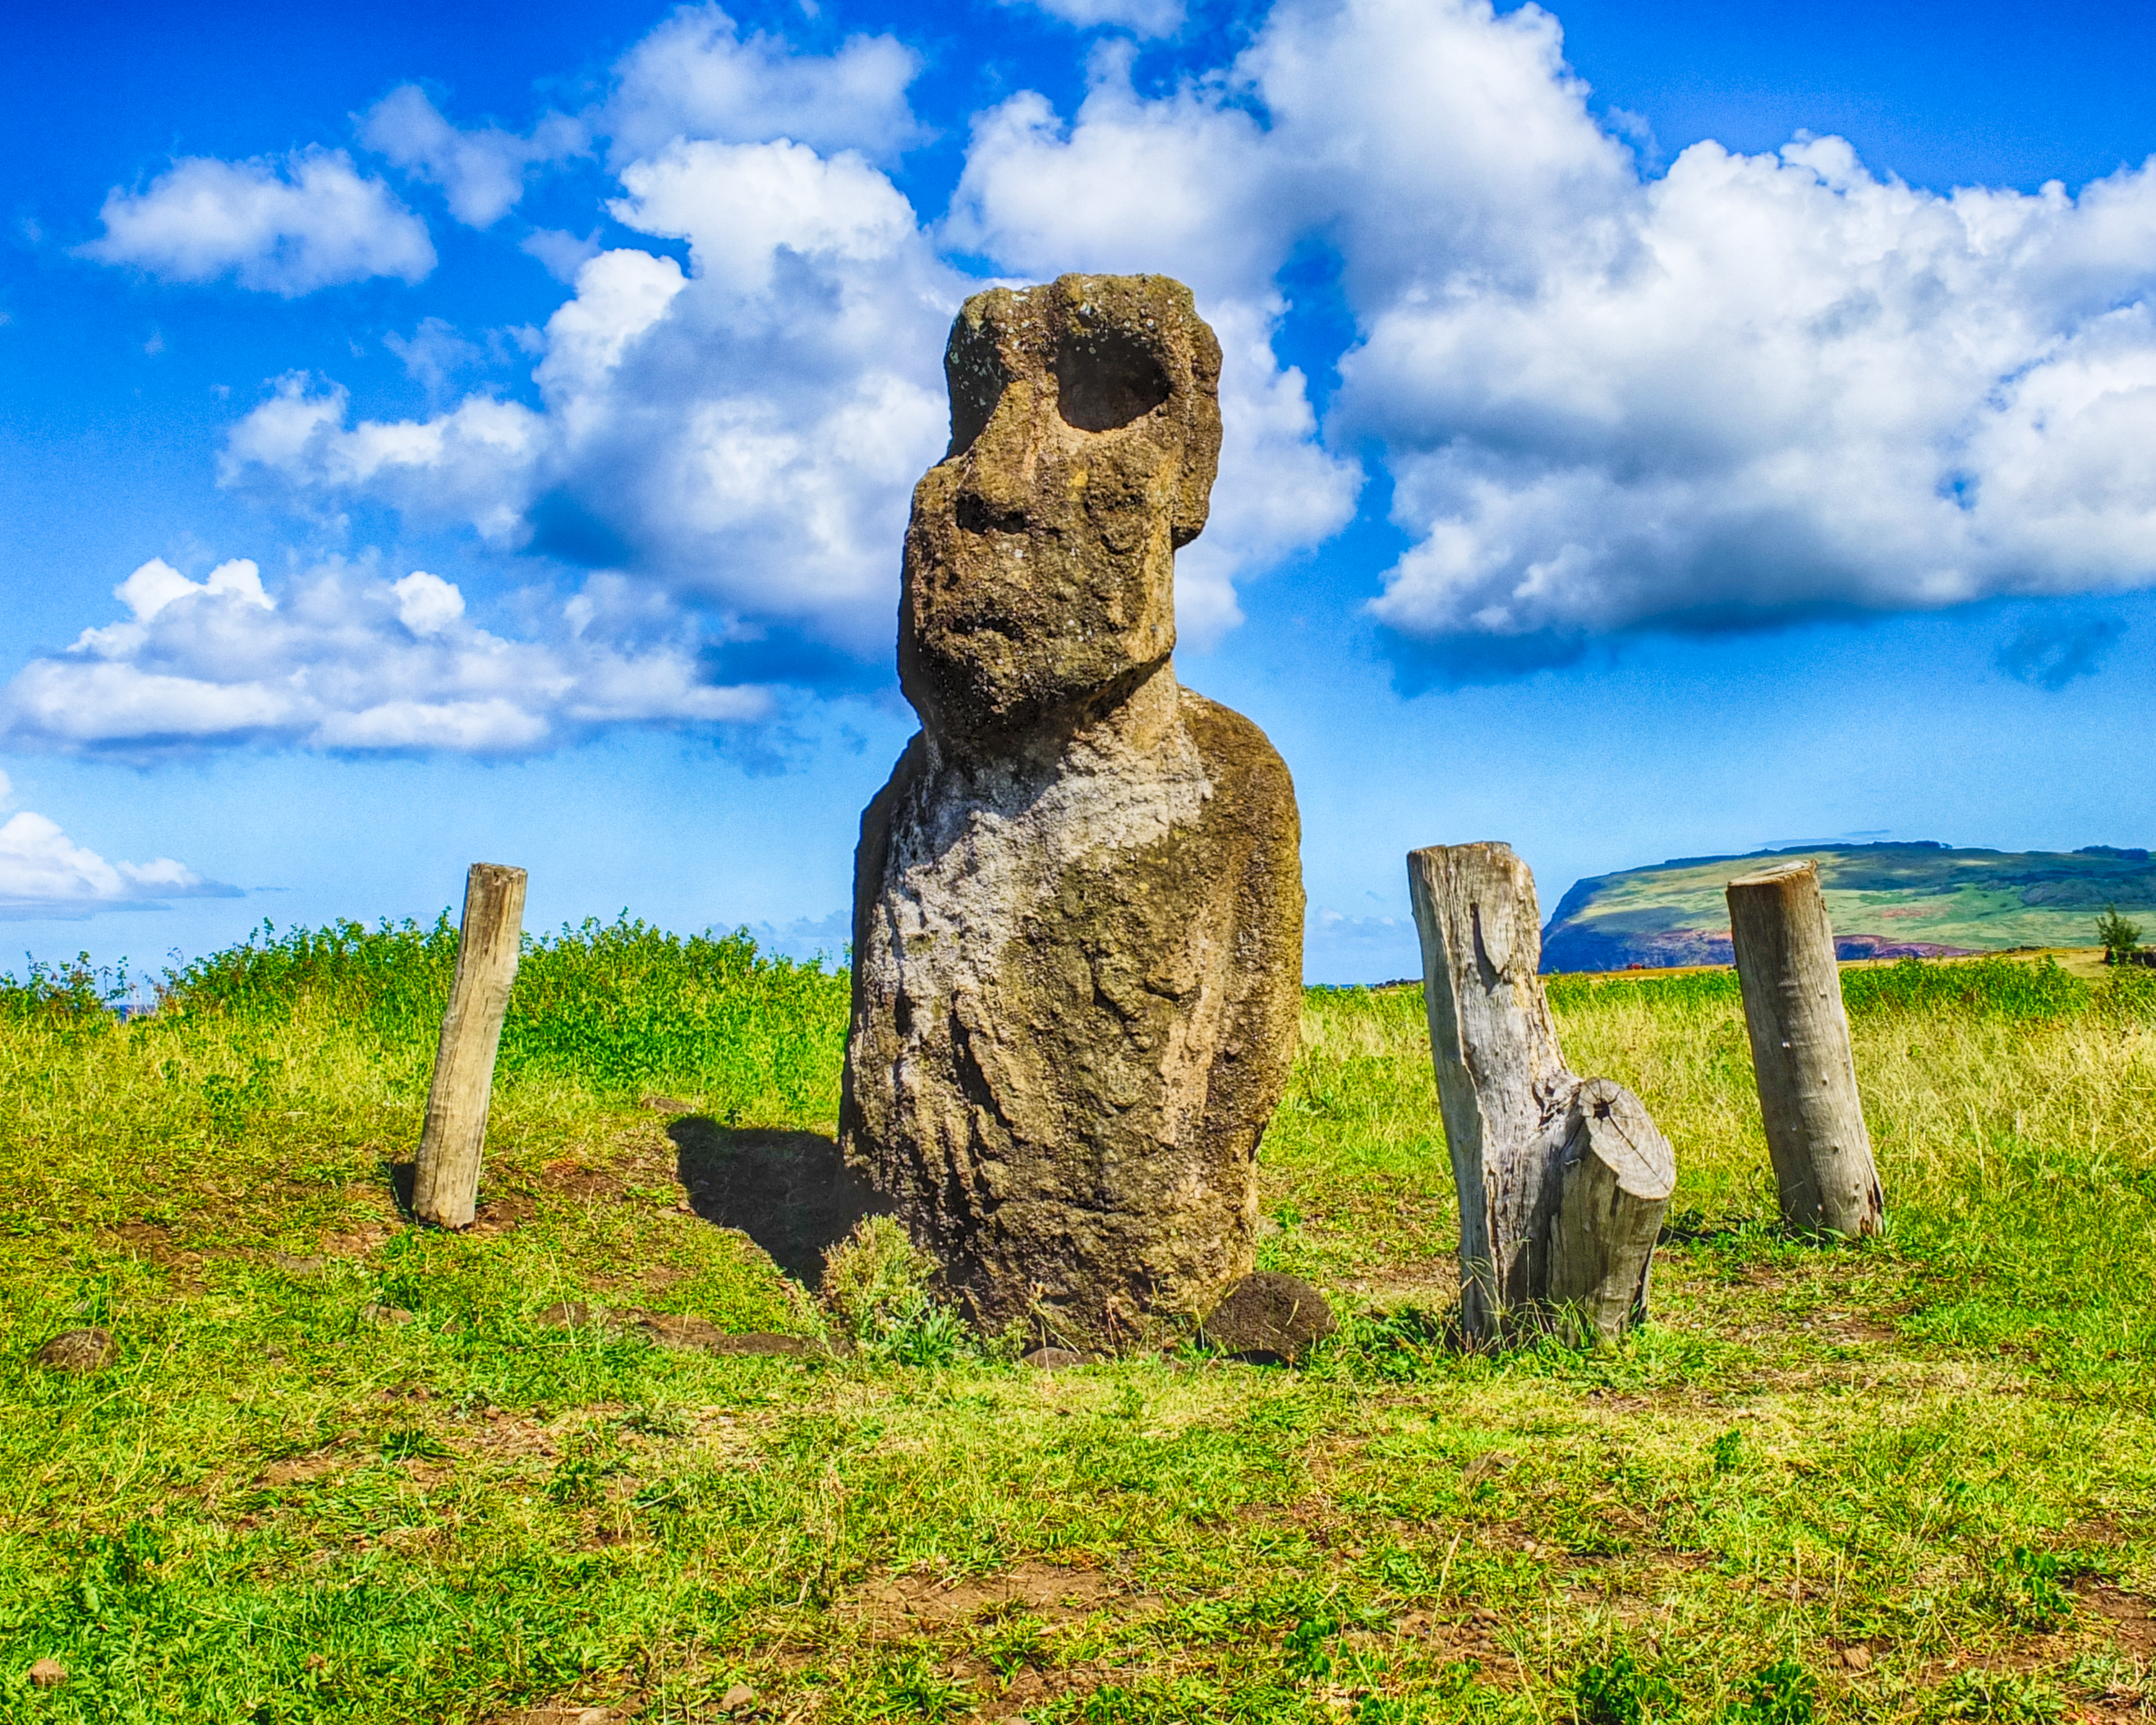 The first Moai I saw